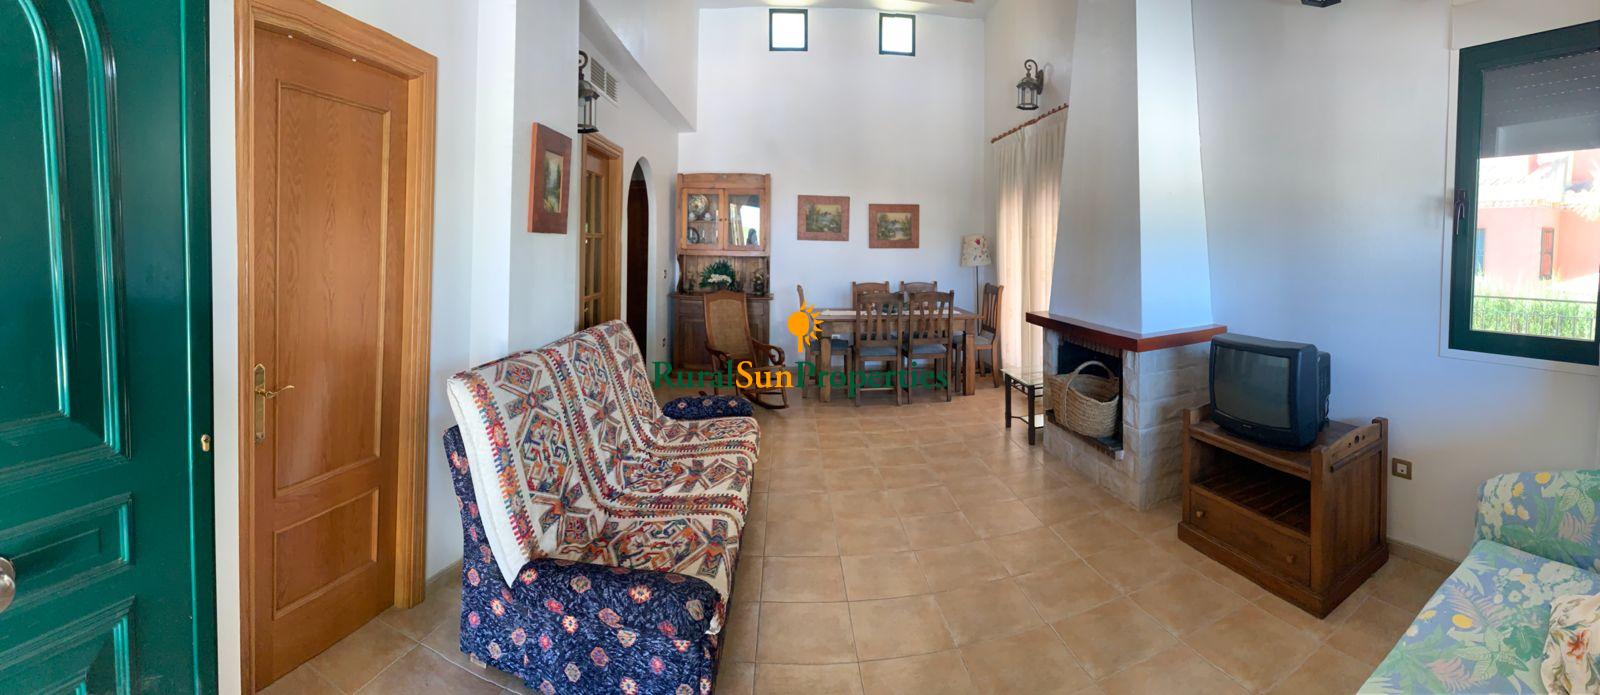 (English) Inmaculate Single Storey Villa for sale in Calasparra. Devolepment Cañada Verde-Valle del Sol.